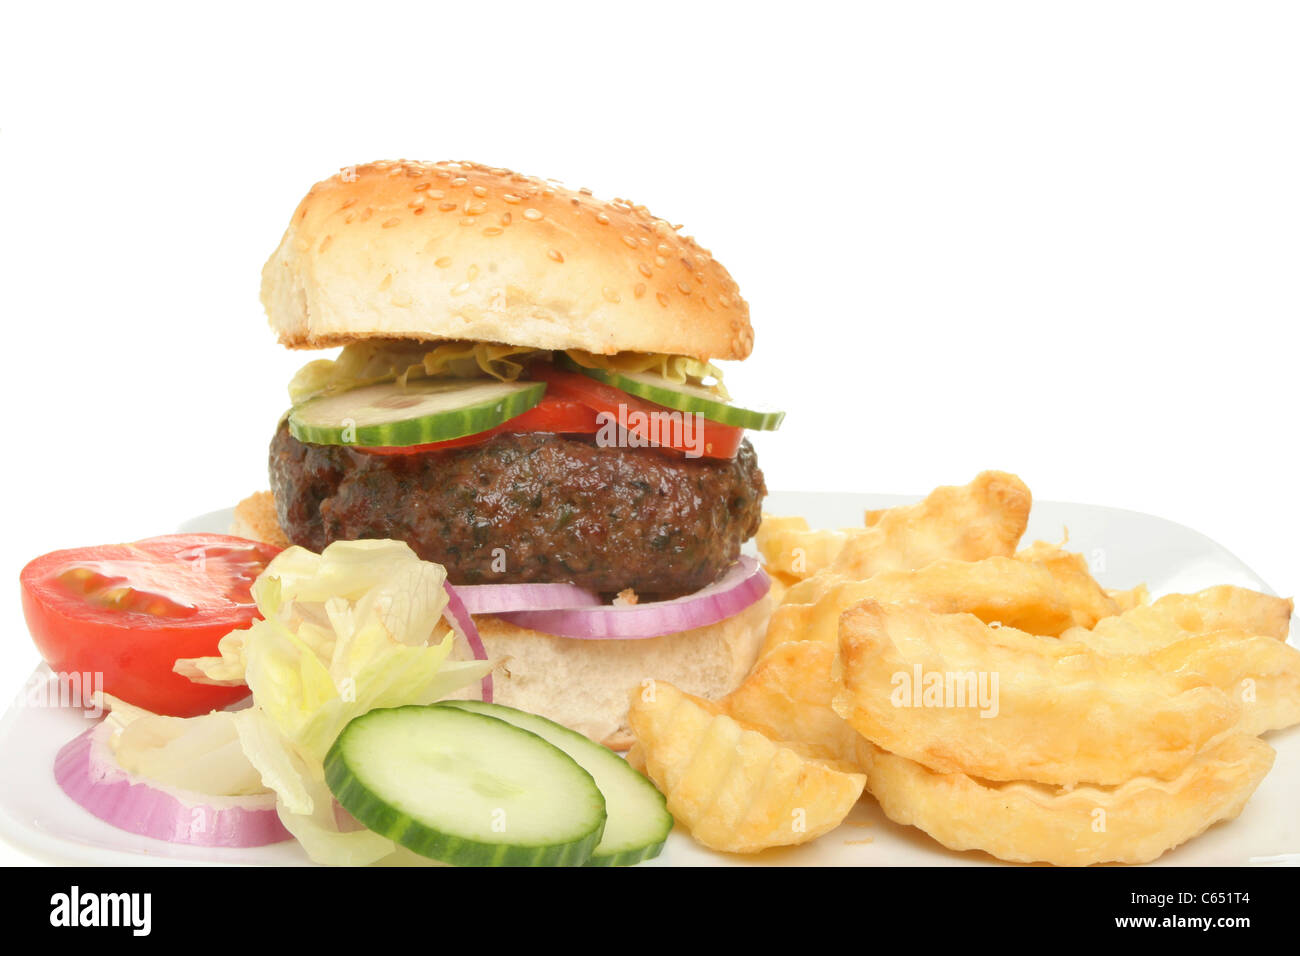 Closeup of a burger salad and chips Stock Photo